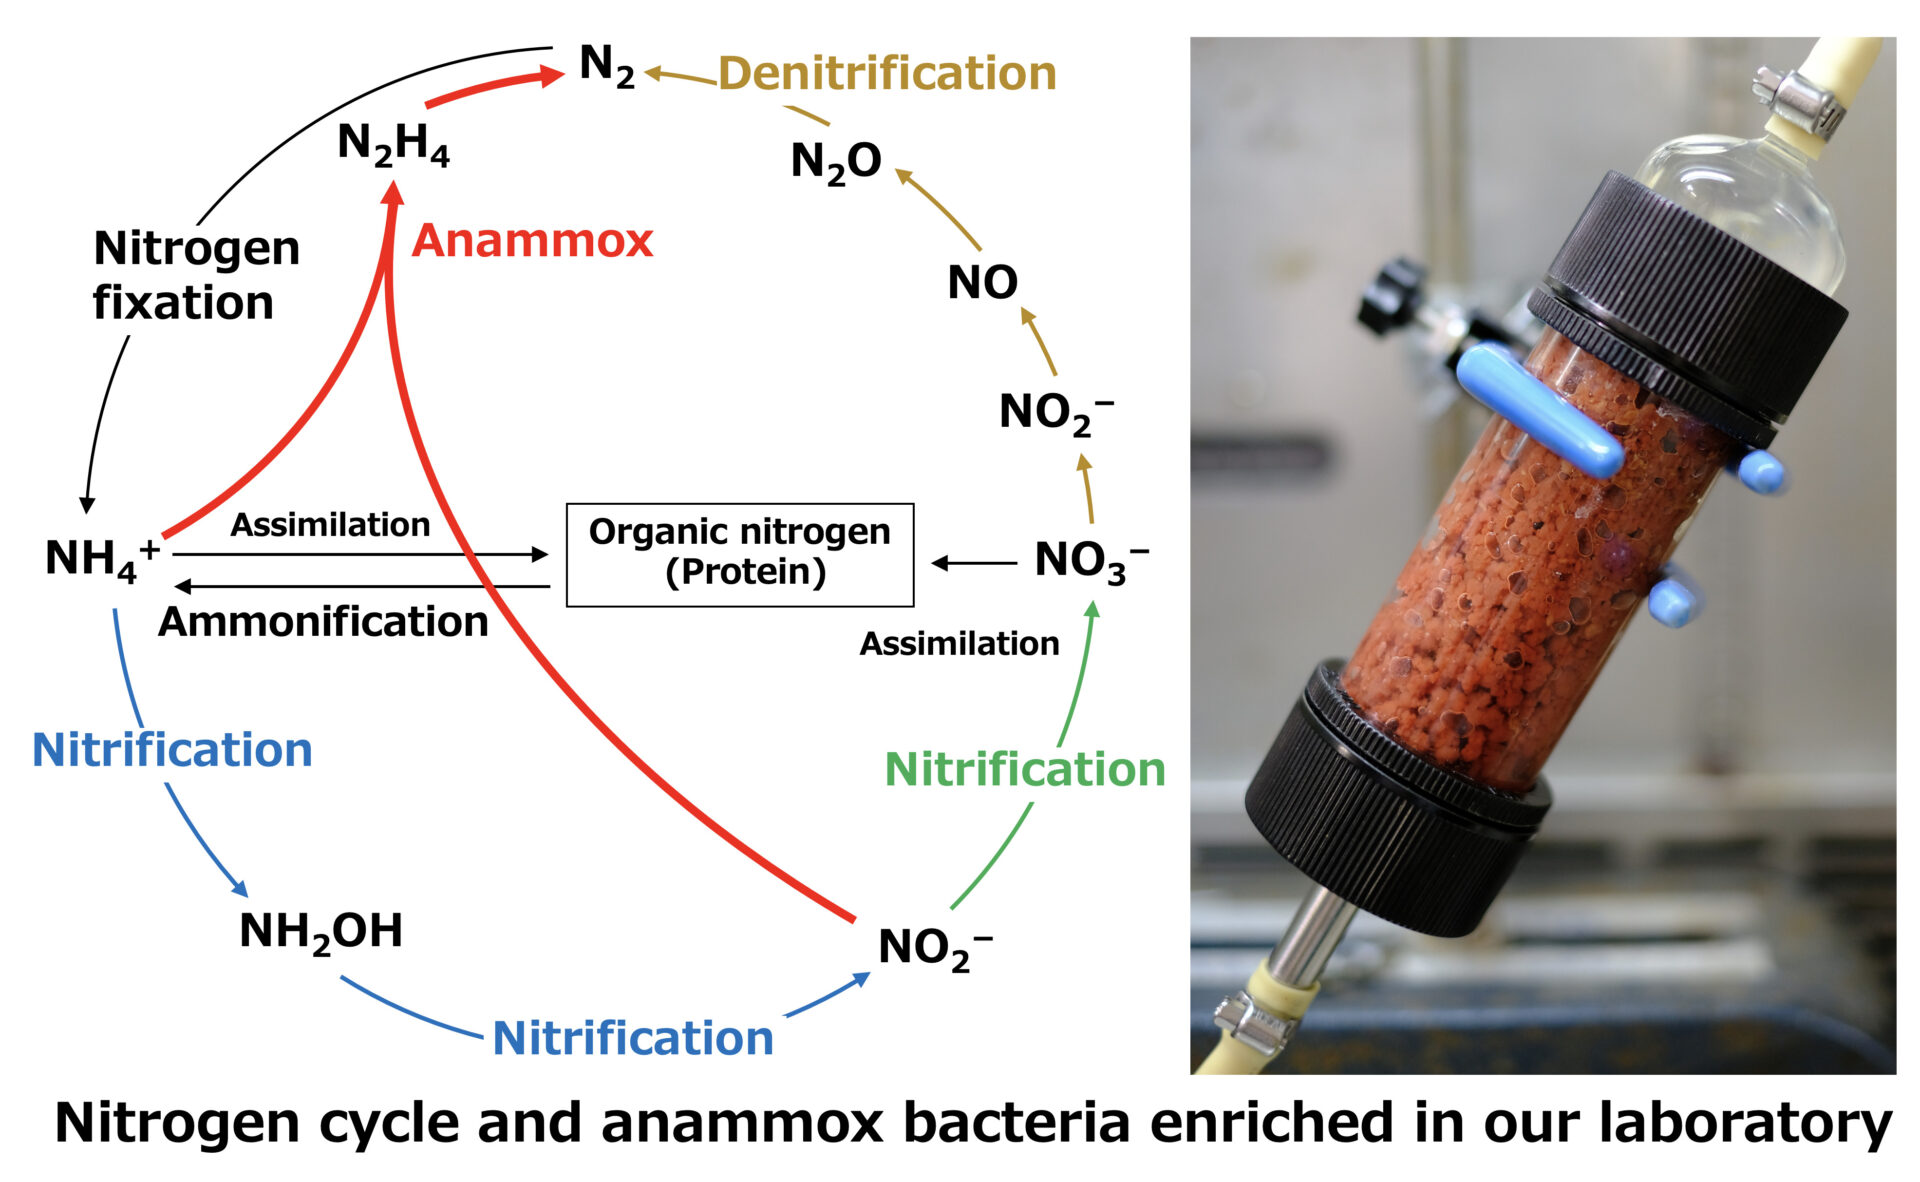 image:Biological nitrogen removal using anaerobic ammonium oxidation (anammox)